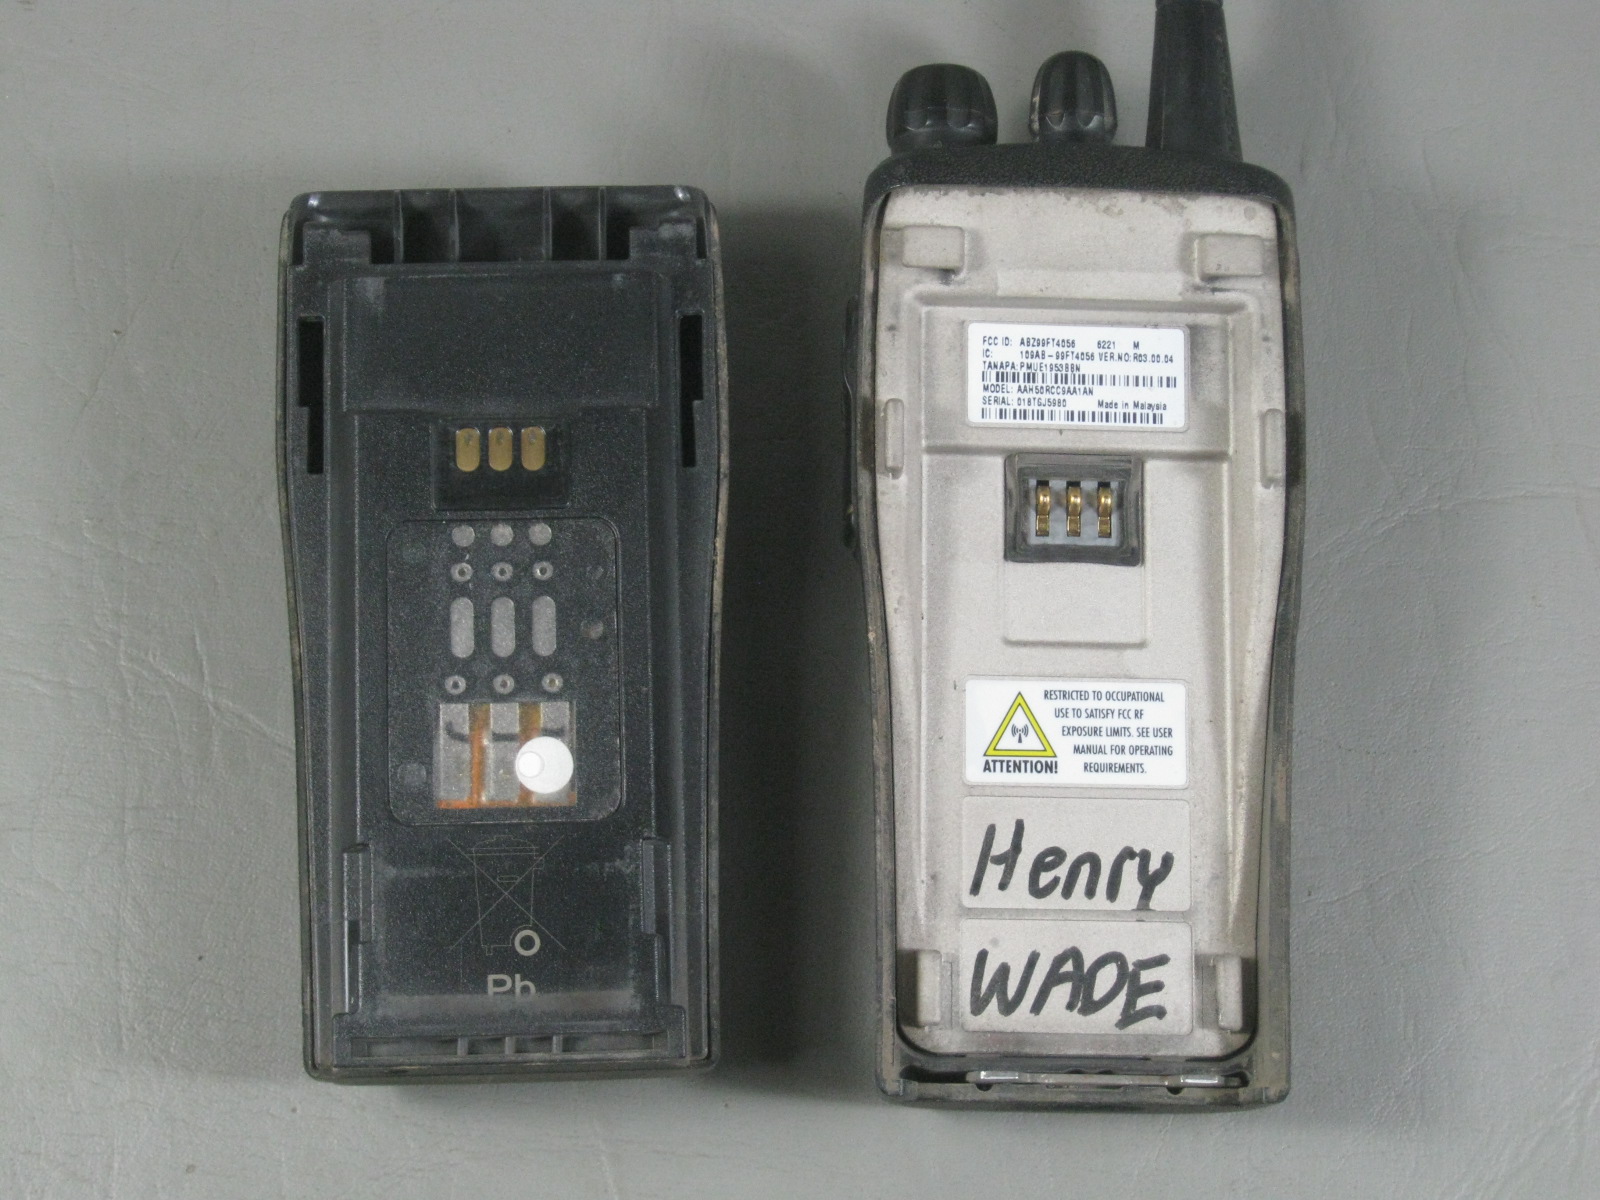 2 Motorola Radius CP150 UHF Narrow Band 2-Way Commercial Radios Tested + Working 5